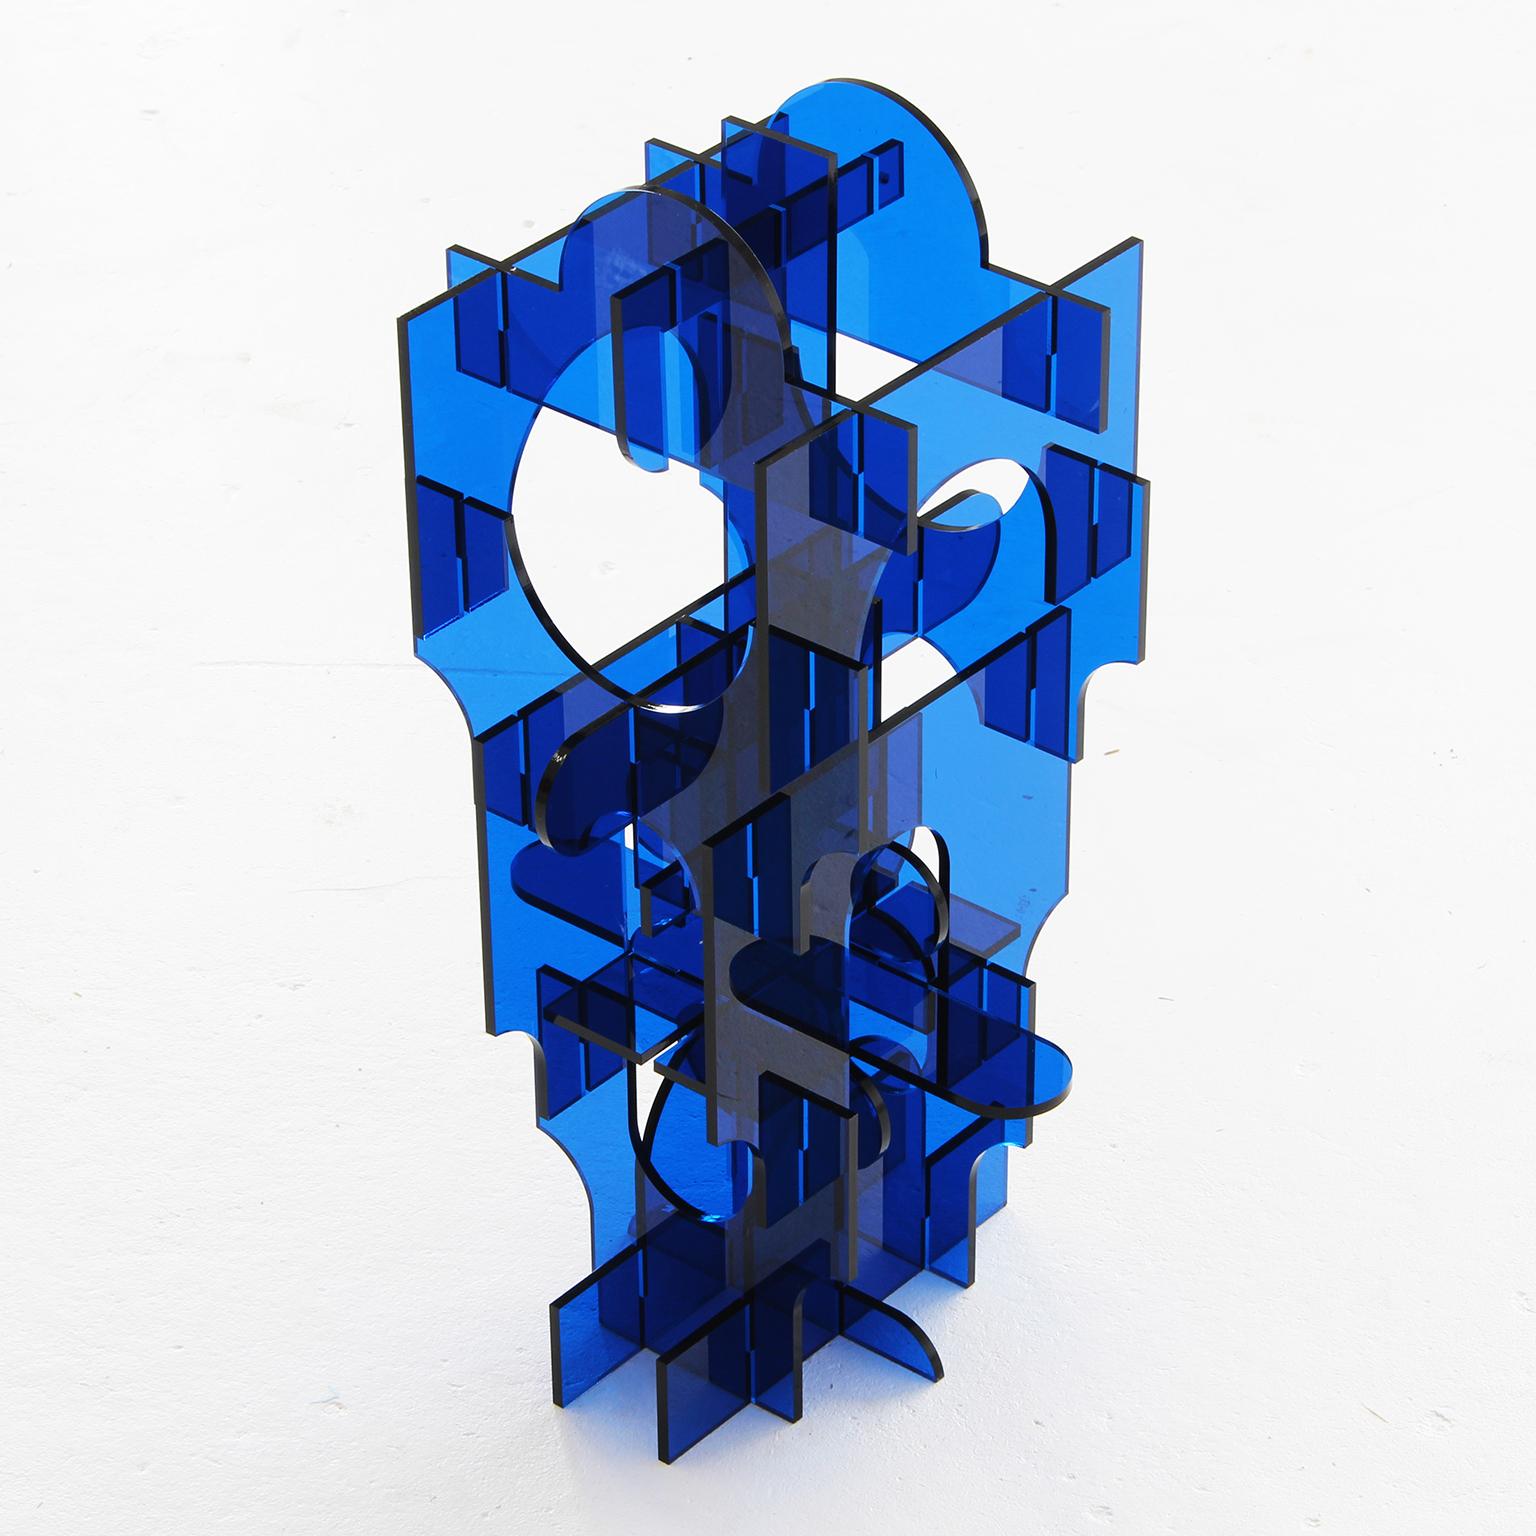 Ghost Tower no. 1 - Blue Figurative Sculpture by David Umemoto